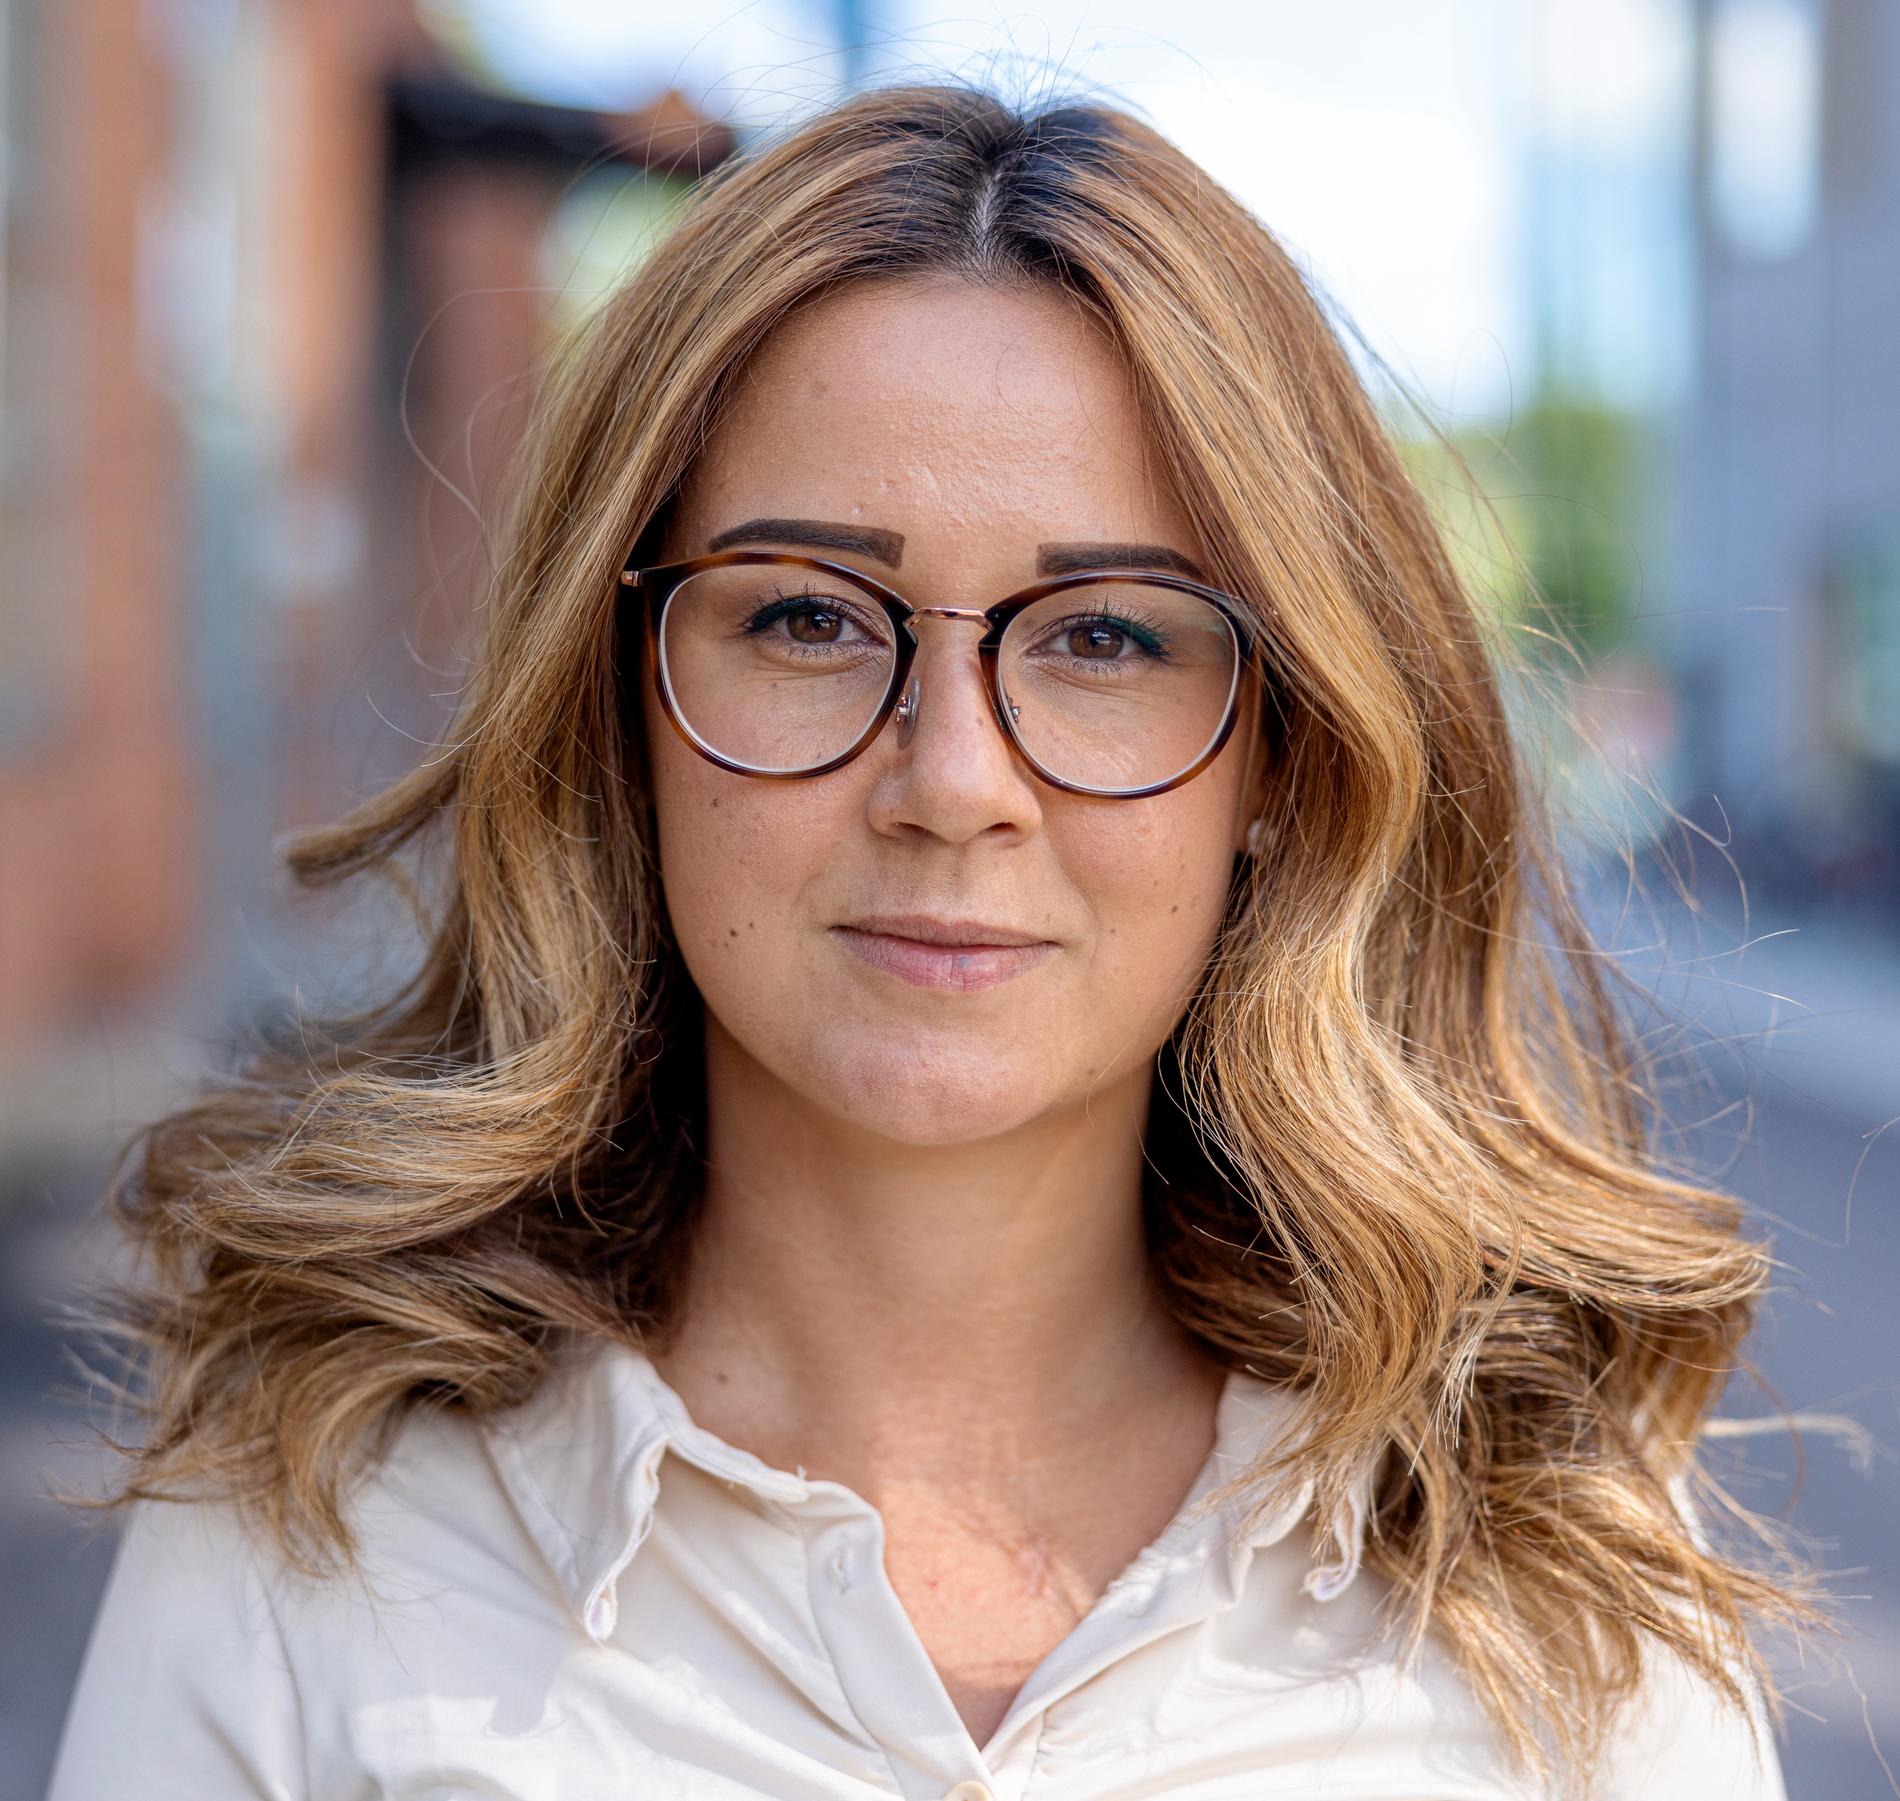 Mathilda Leijonborg arbetar som socialsekreterare i Västerås. 